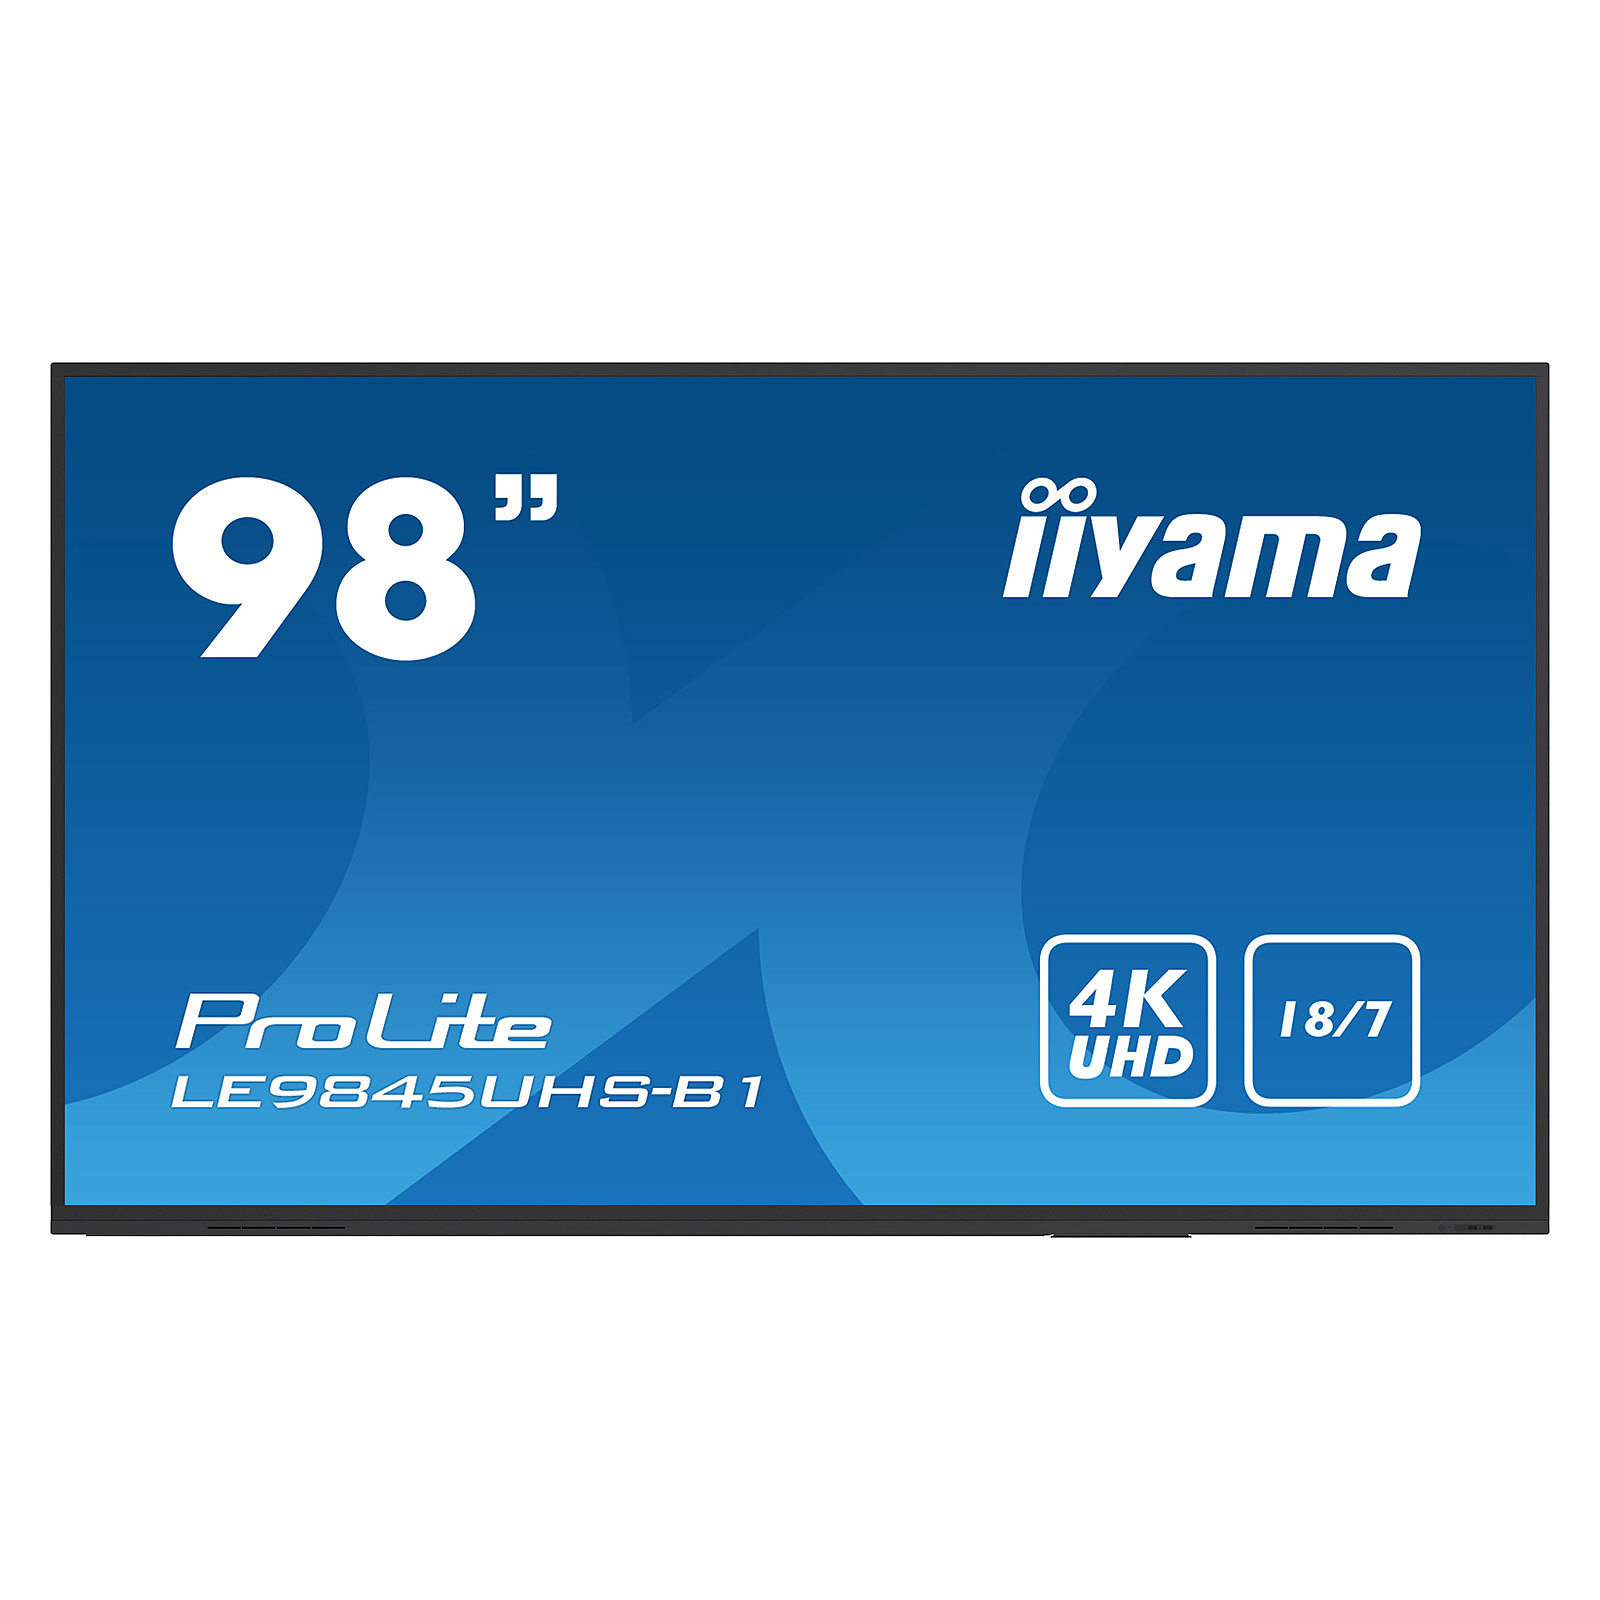 iiyama 98" LED - ProLite LE9845UHS-B1 - Ecran dynamique iiyama